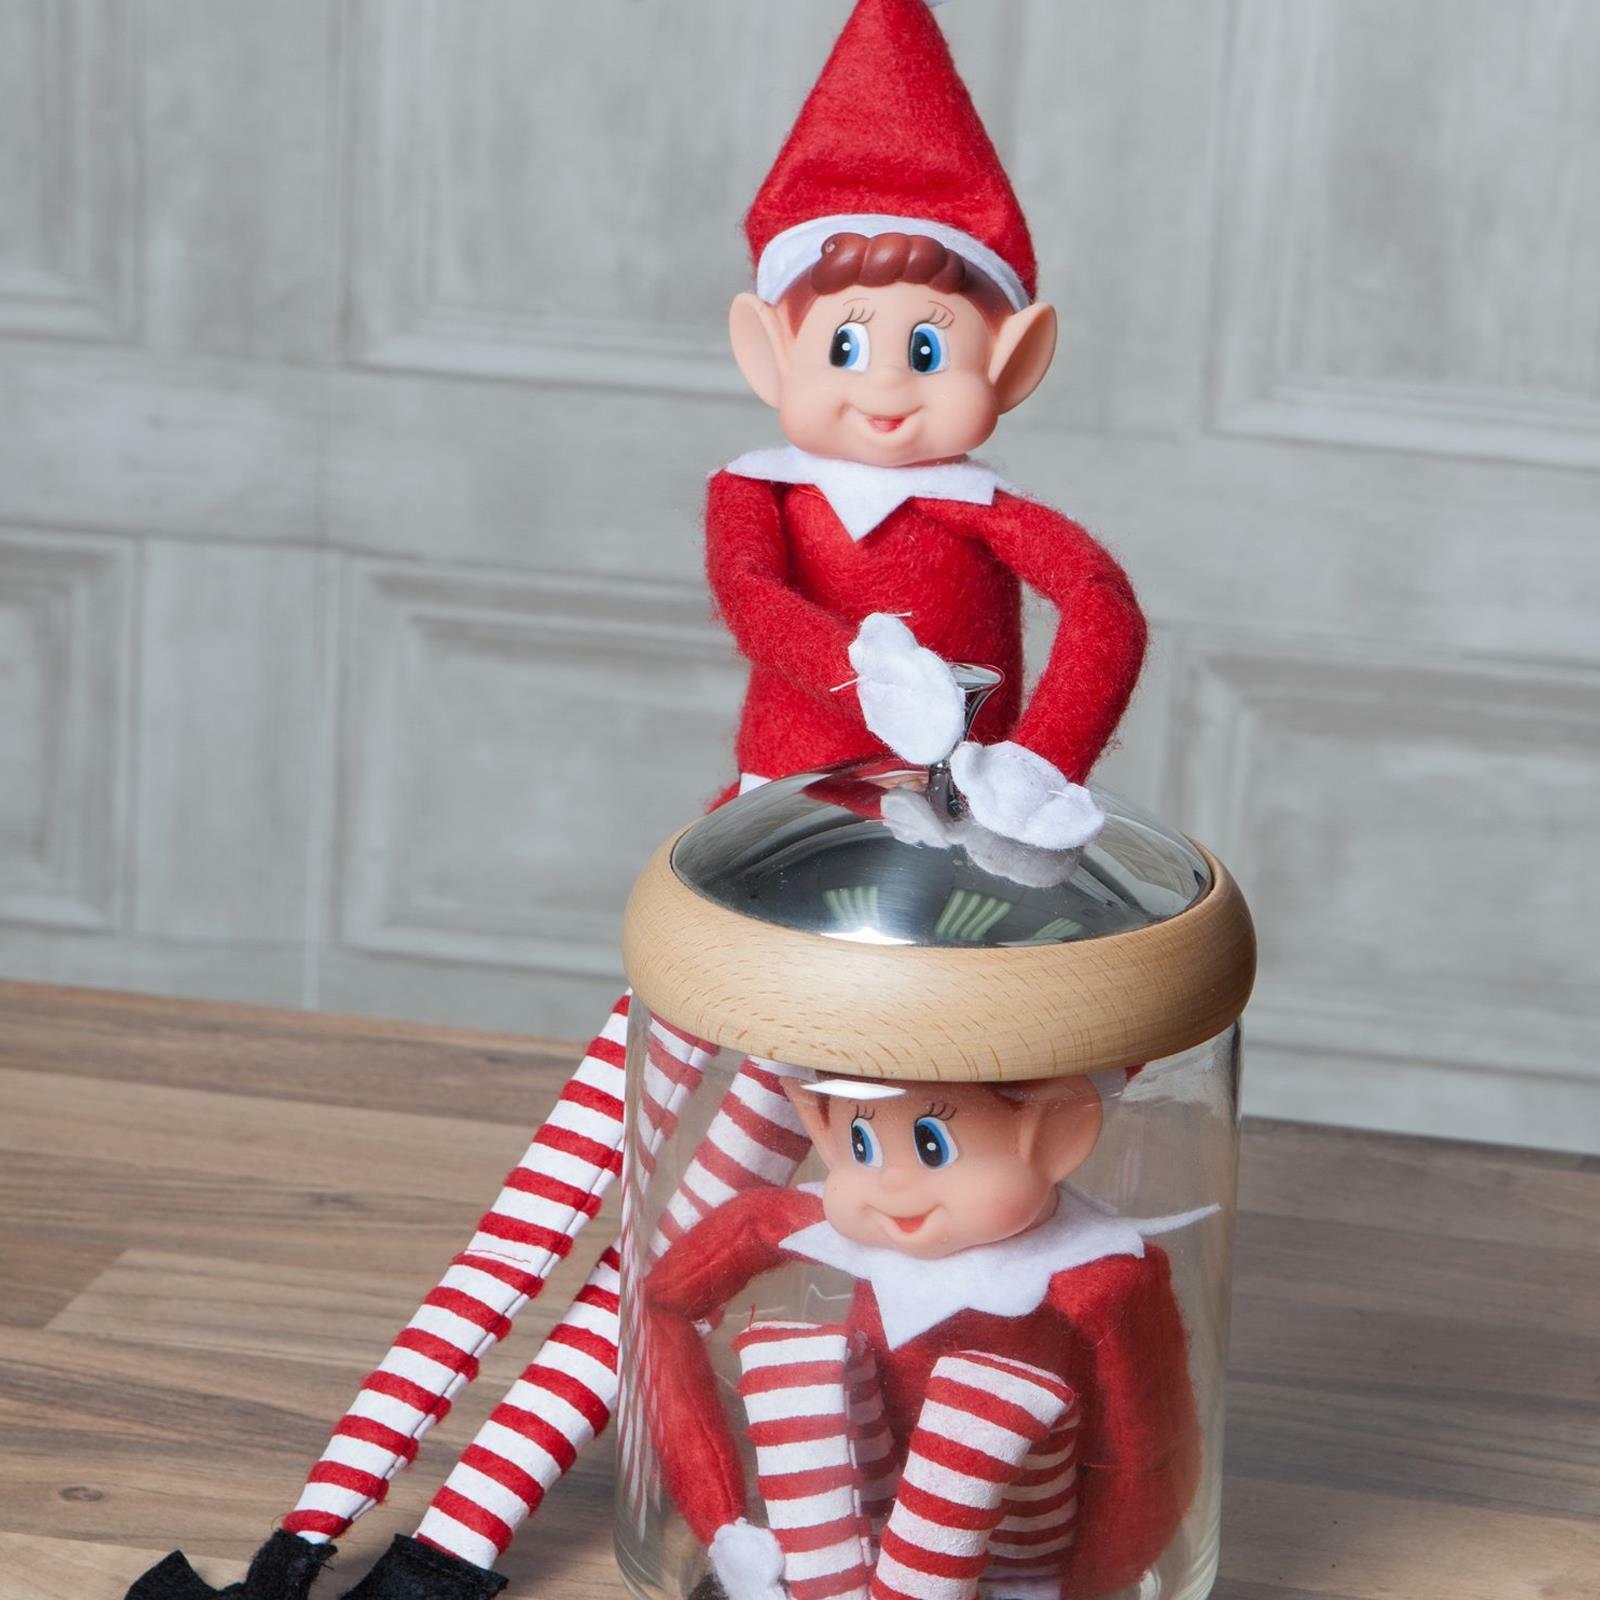 2 x 12" Elves Behaving Badly Figure Christmas Doll Novelty Plush Toy Gift Xmas